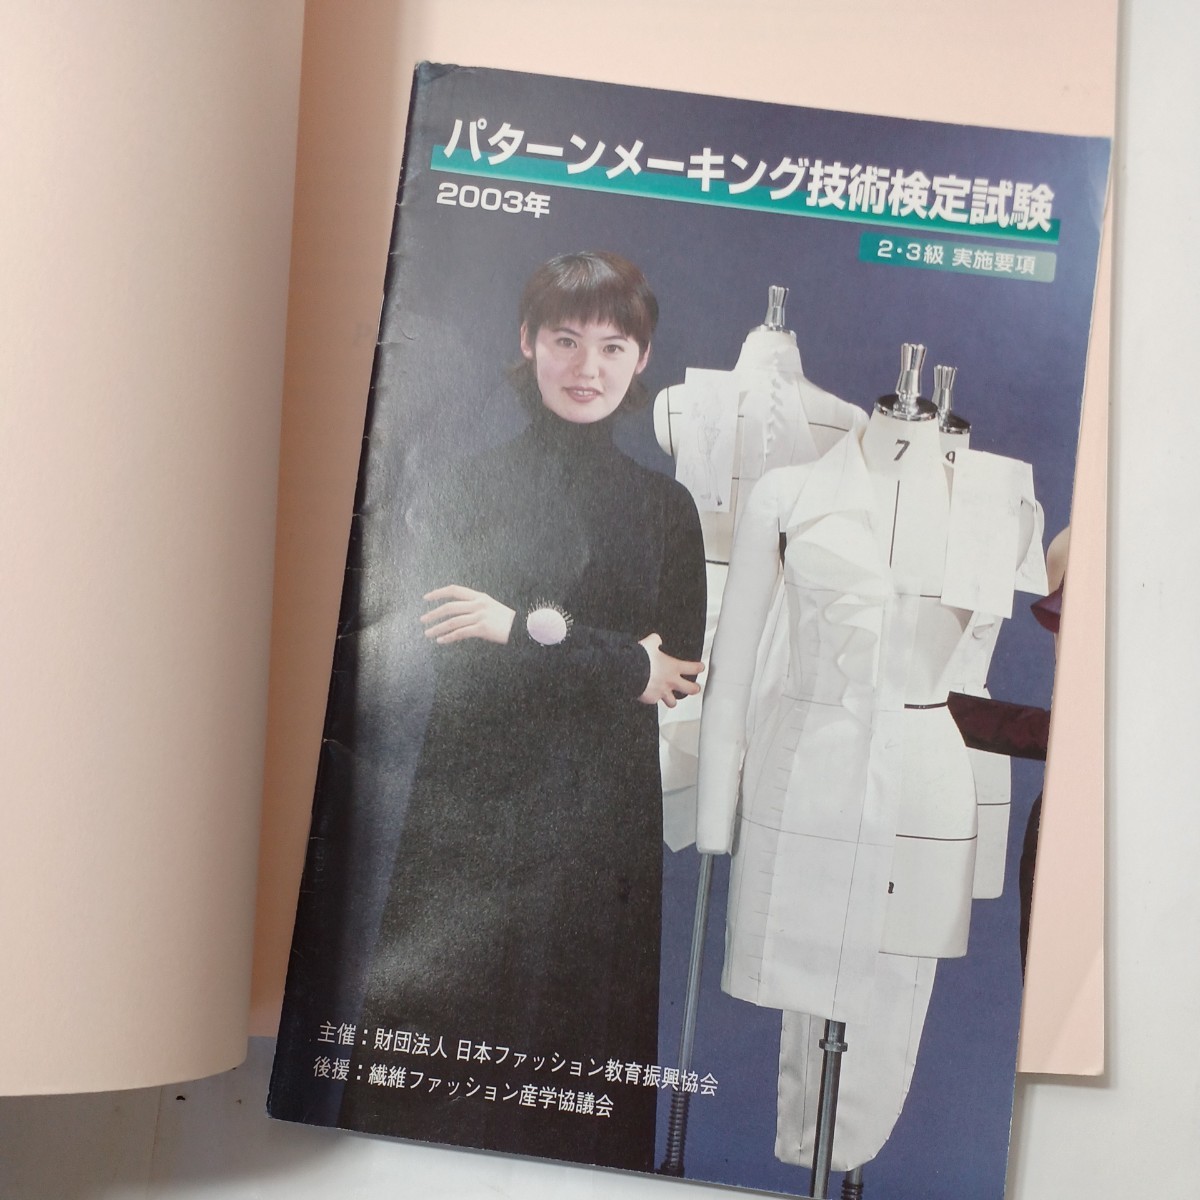 zaa-512♪パターンメーキング技術検定試験2級ガイドブック 日本ファッション教育振興協会 (著) 日本ファッション教育振興協会 (2004/3/20)